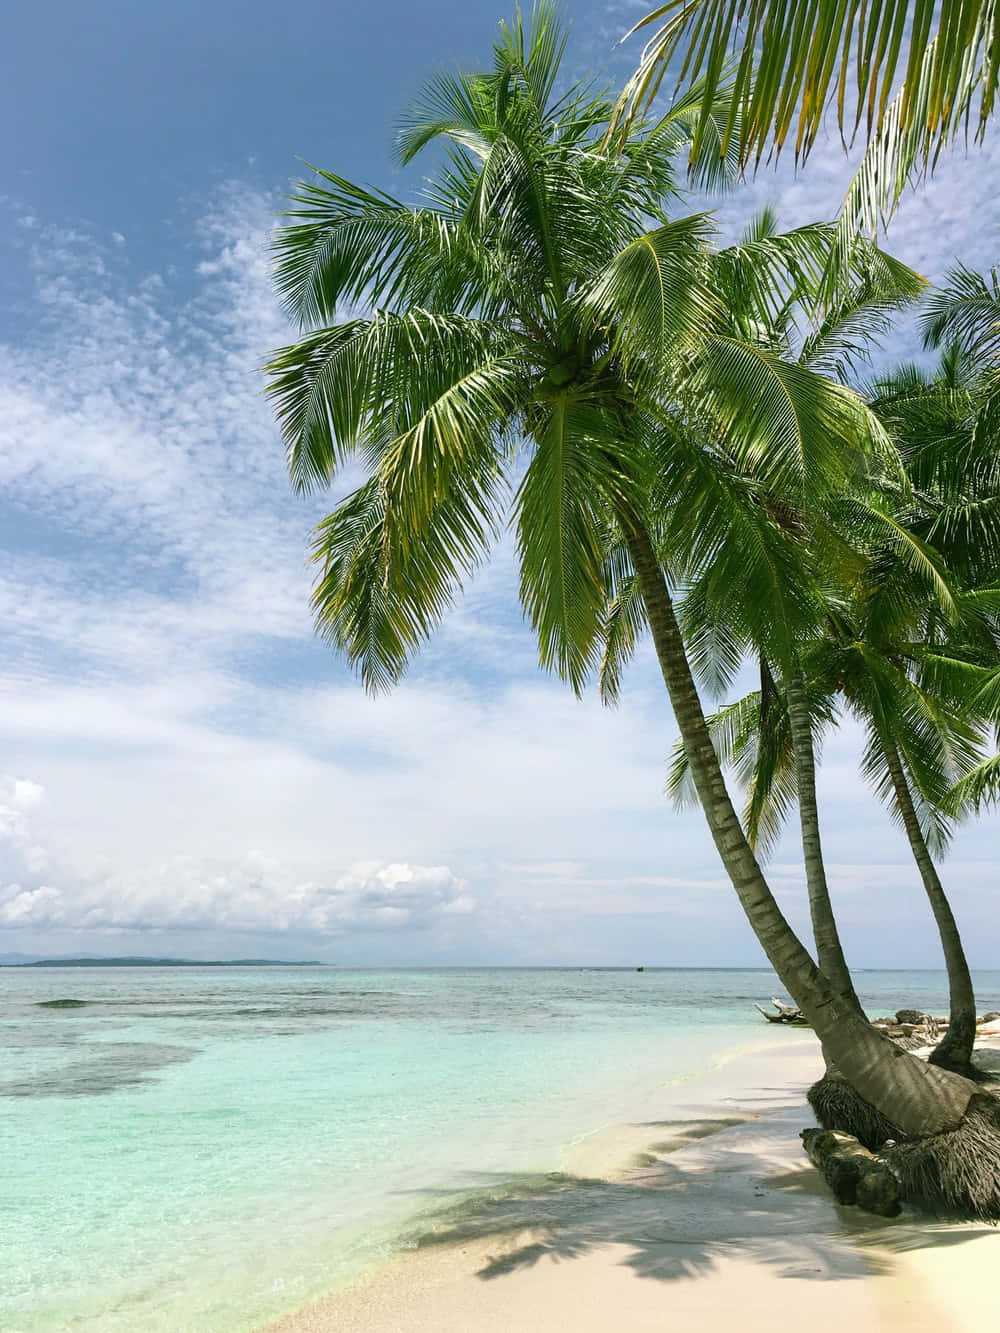 Beautiful Sea With Palm Trees